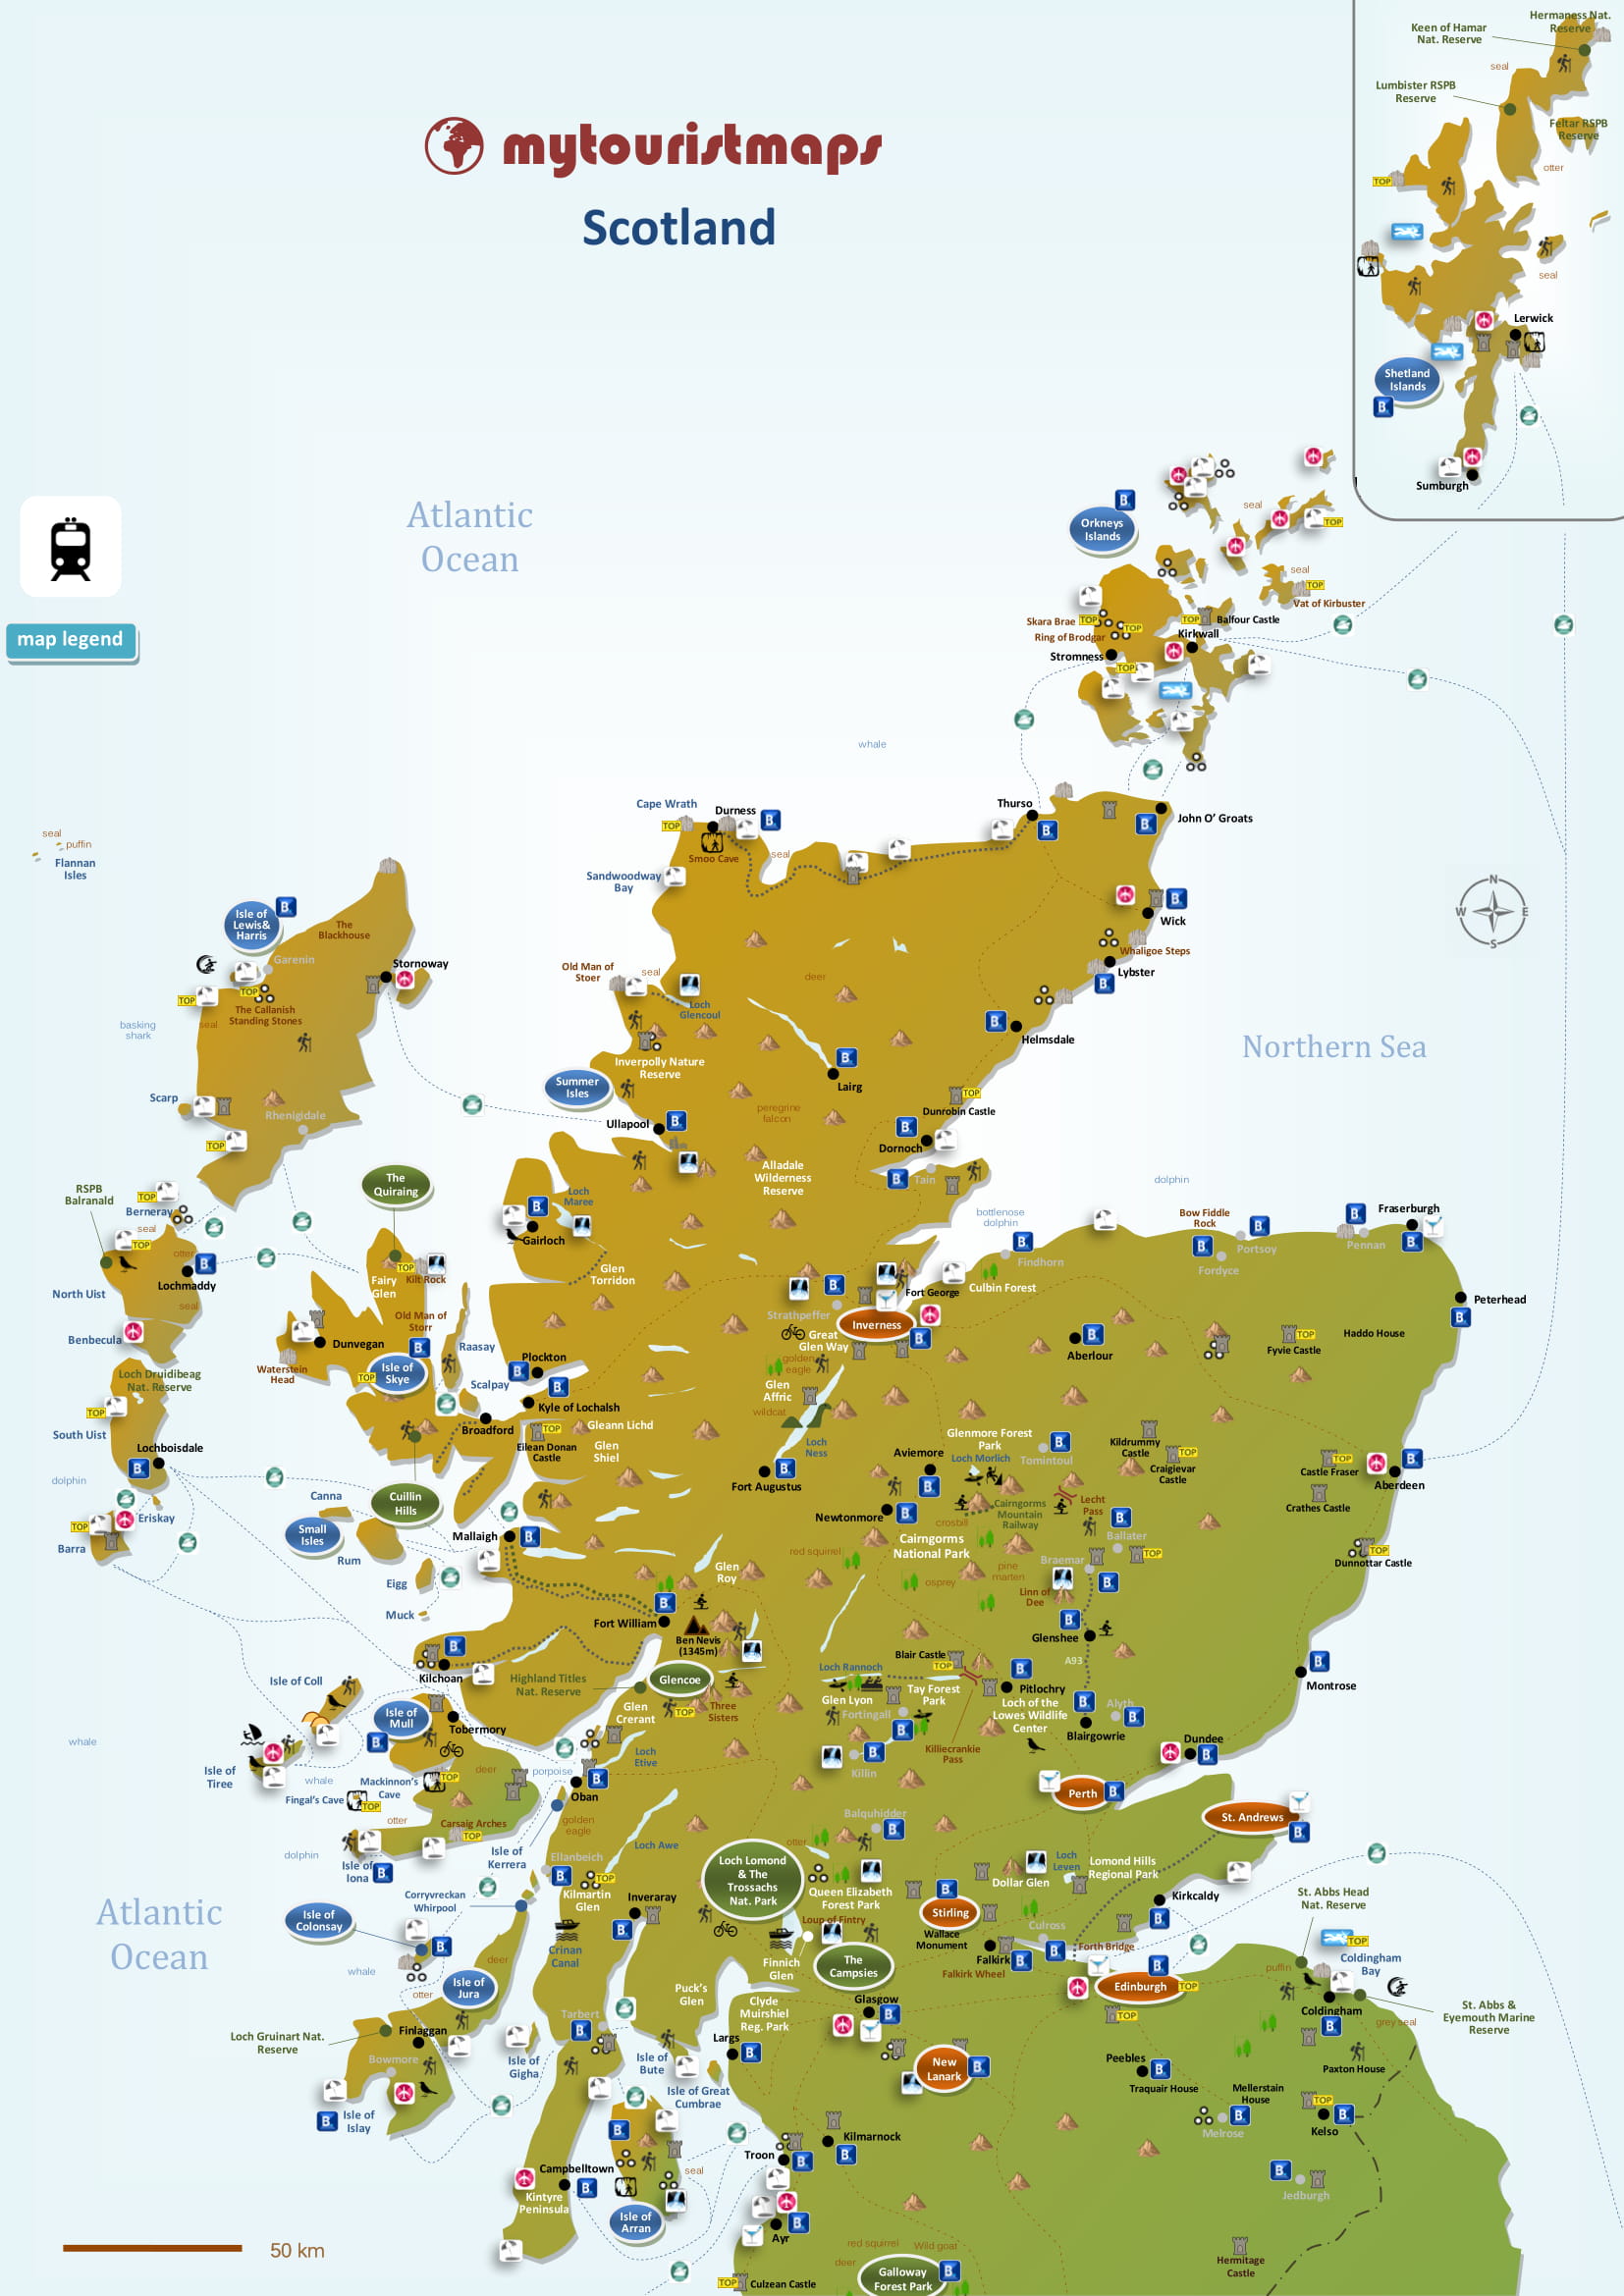 visit scotland data